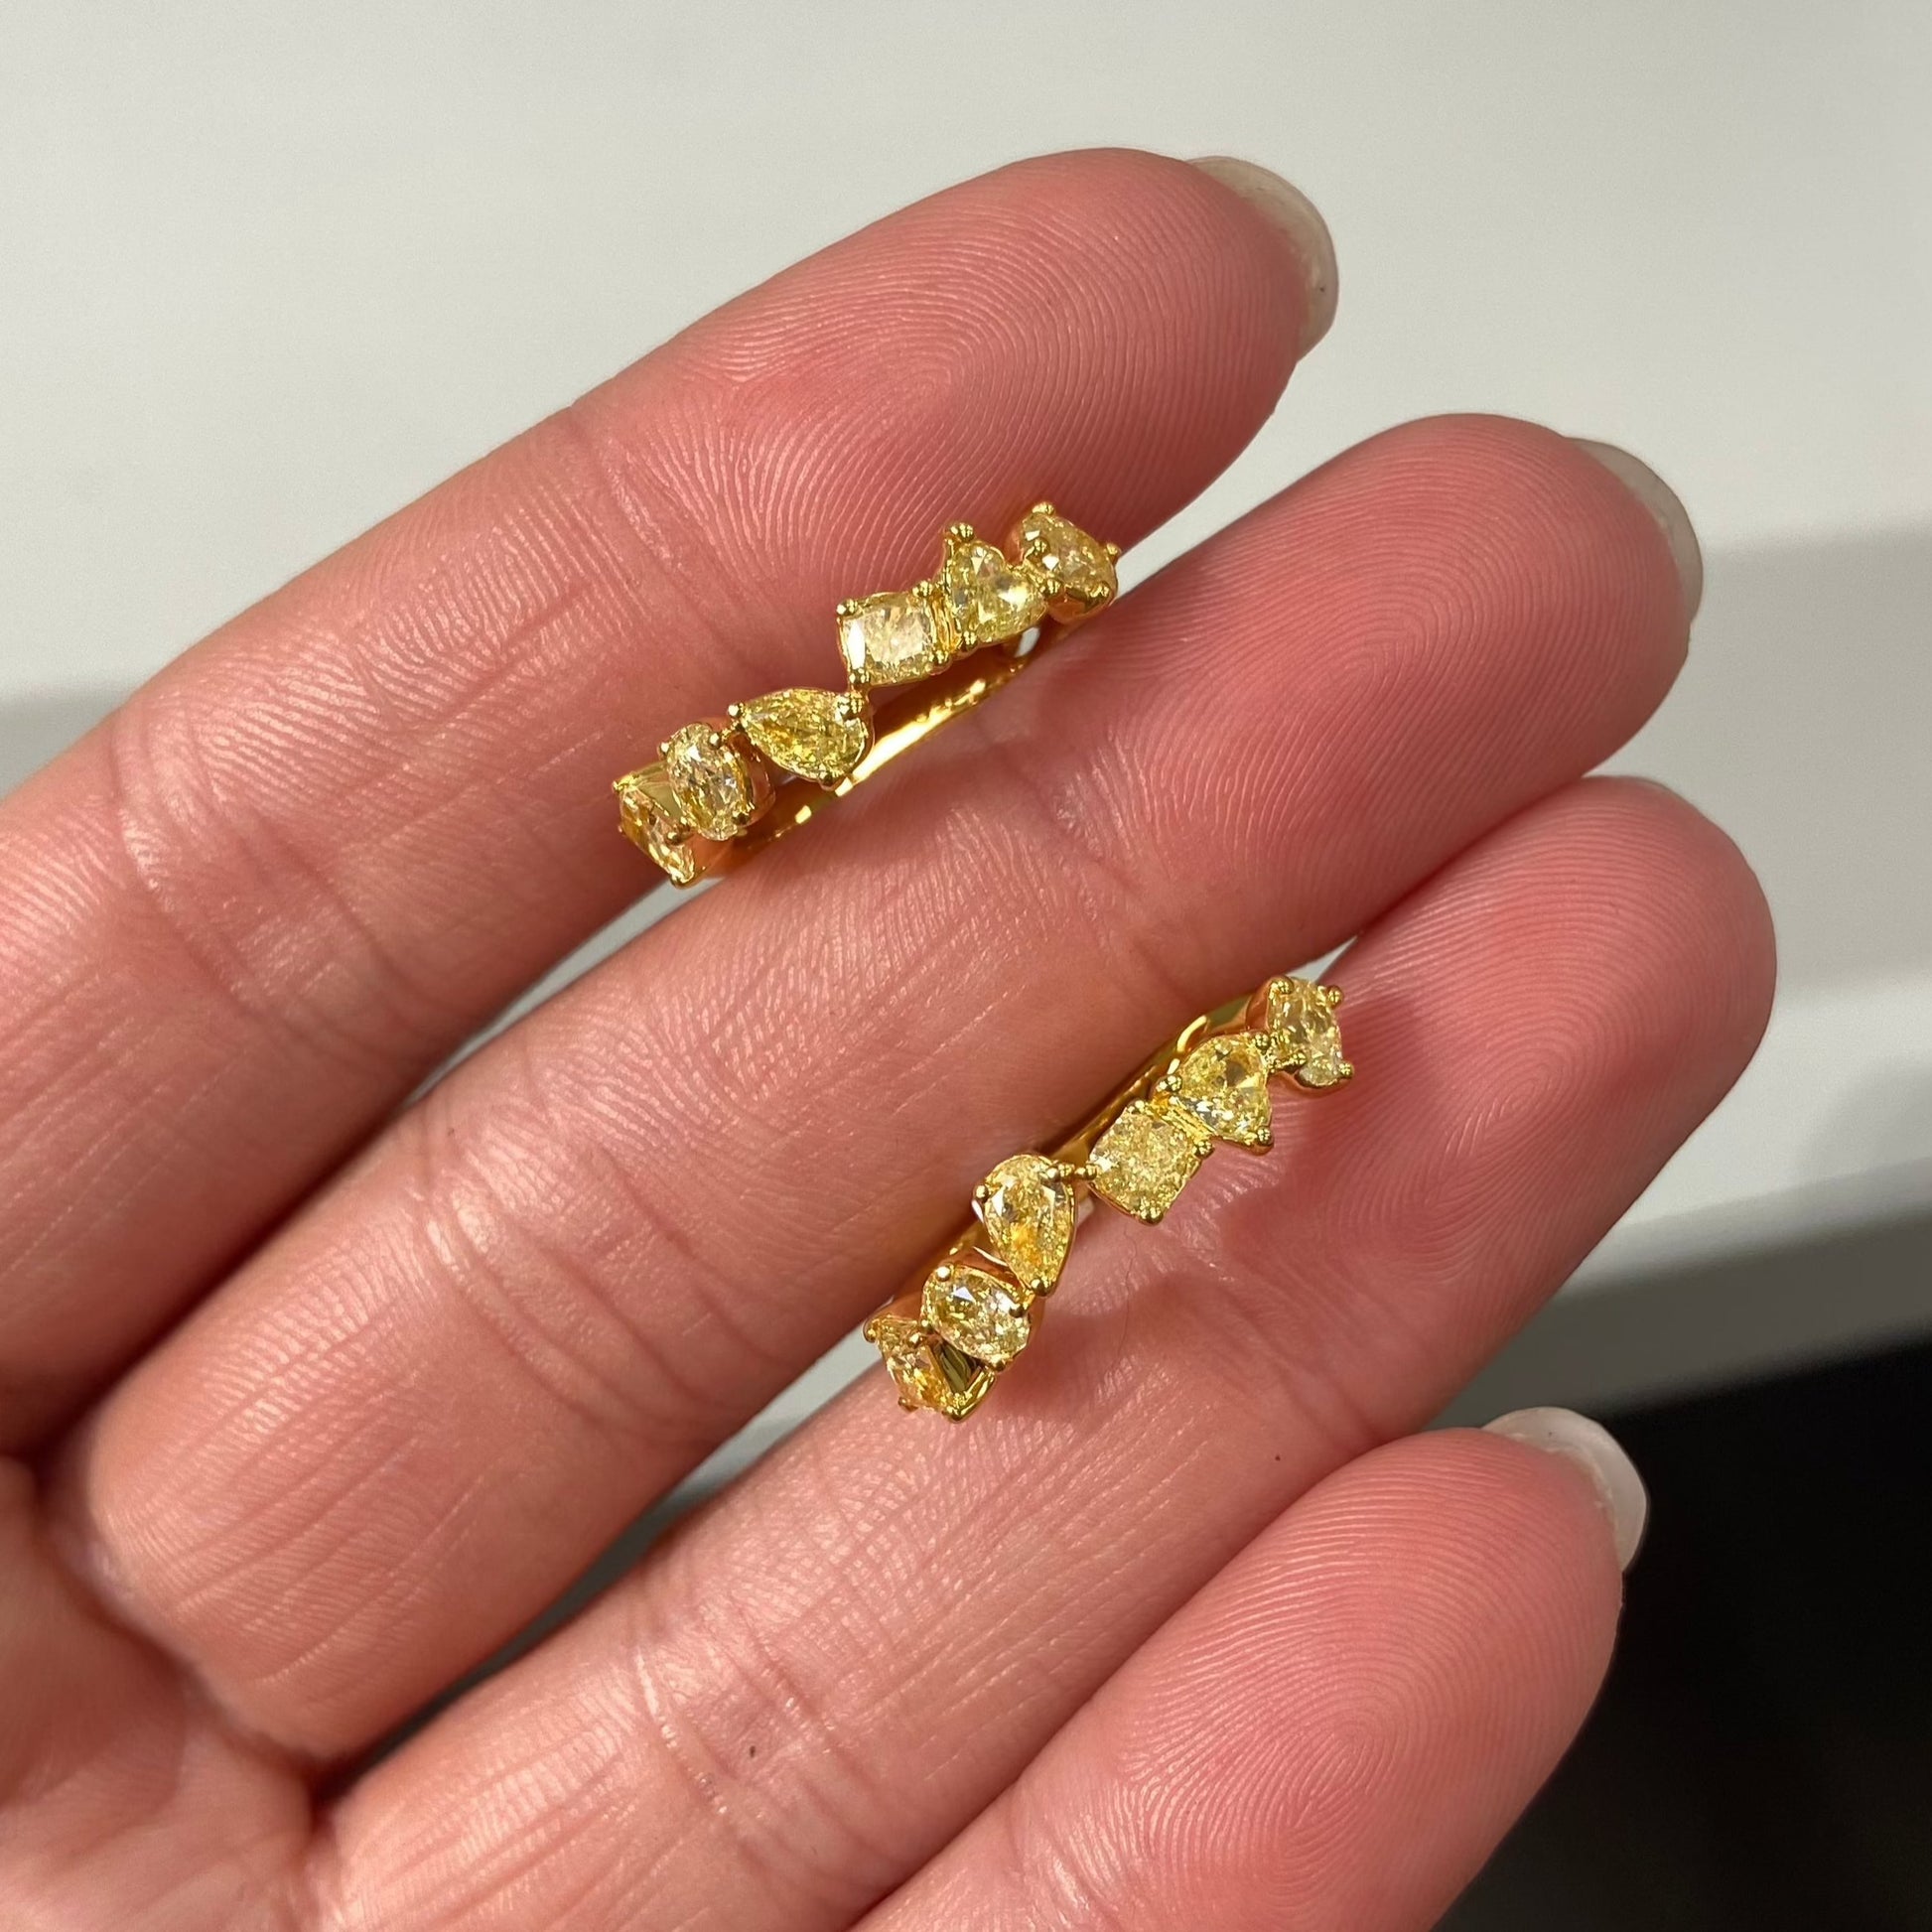 2.55 Carat Total Weight Intense Yellow Diamonds Mixed Shape Diamonds Handmade in NYC